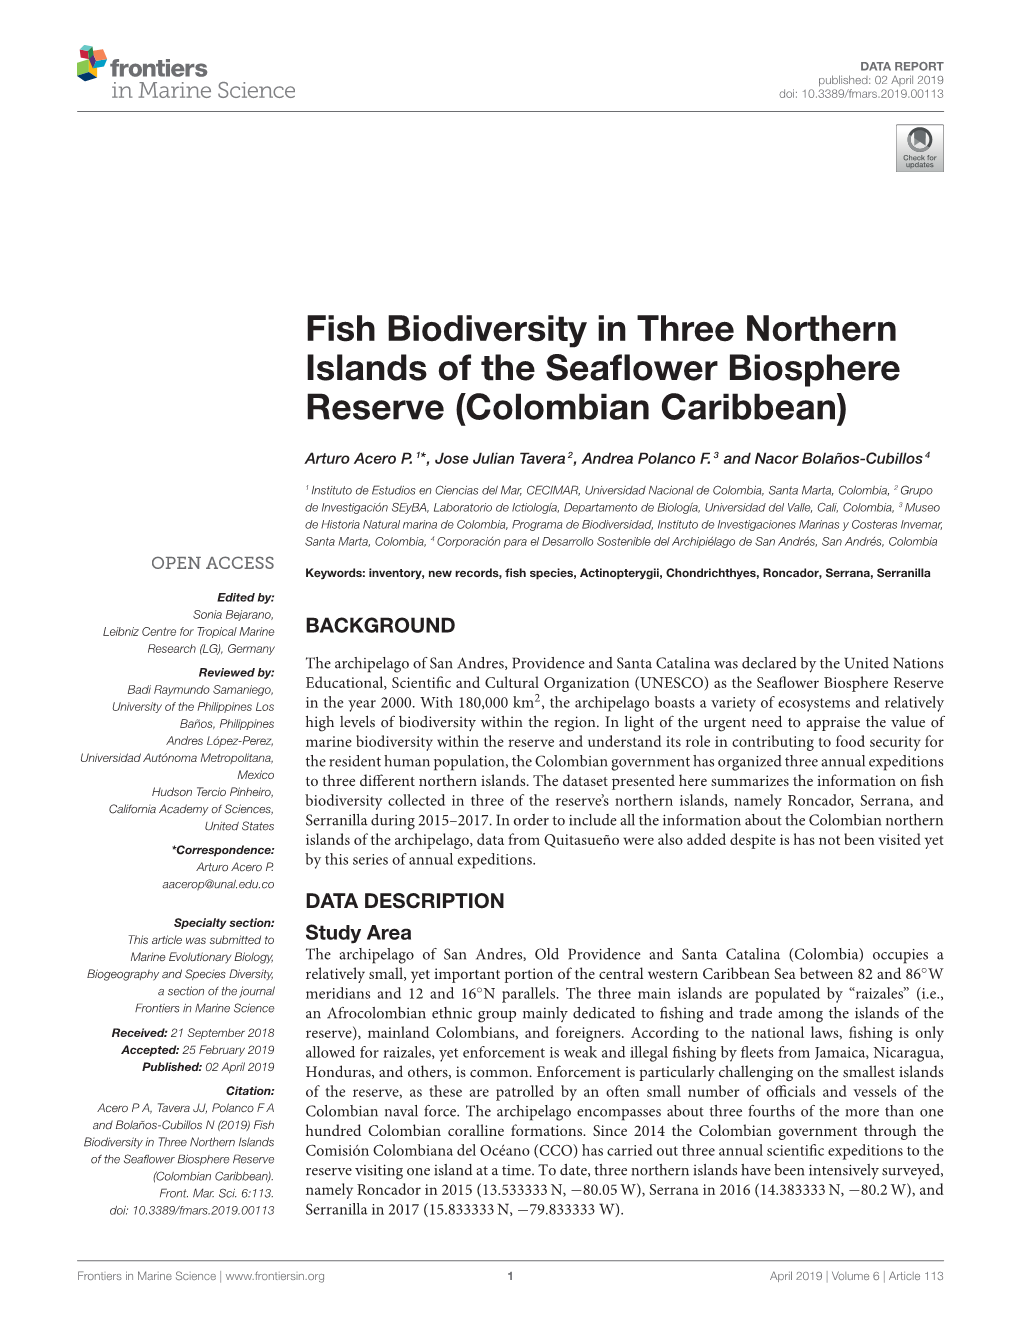 Fish Biodiversity in Three Northern Islands of the Seaflower Biosphere